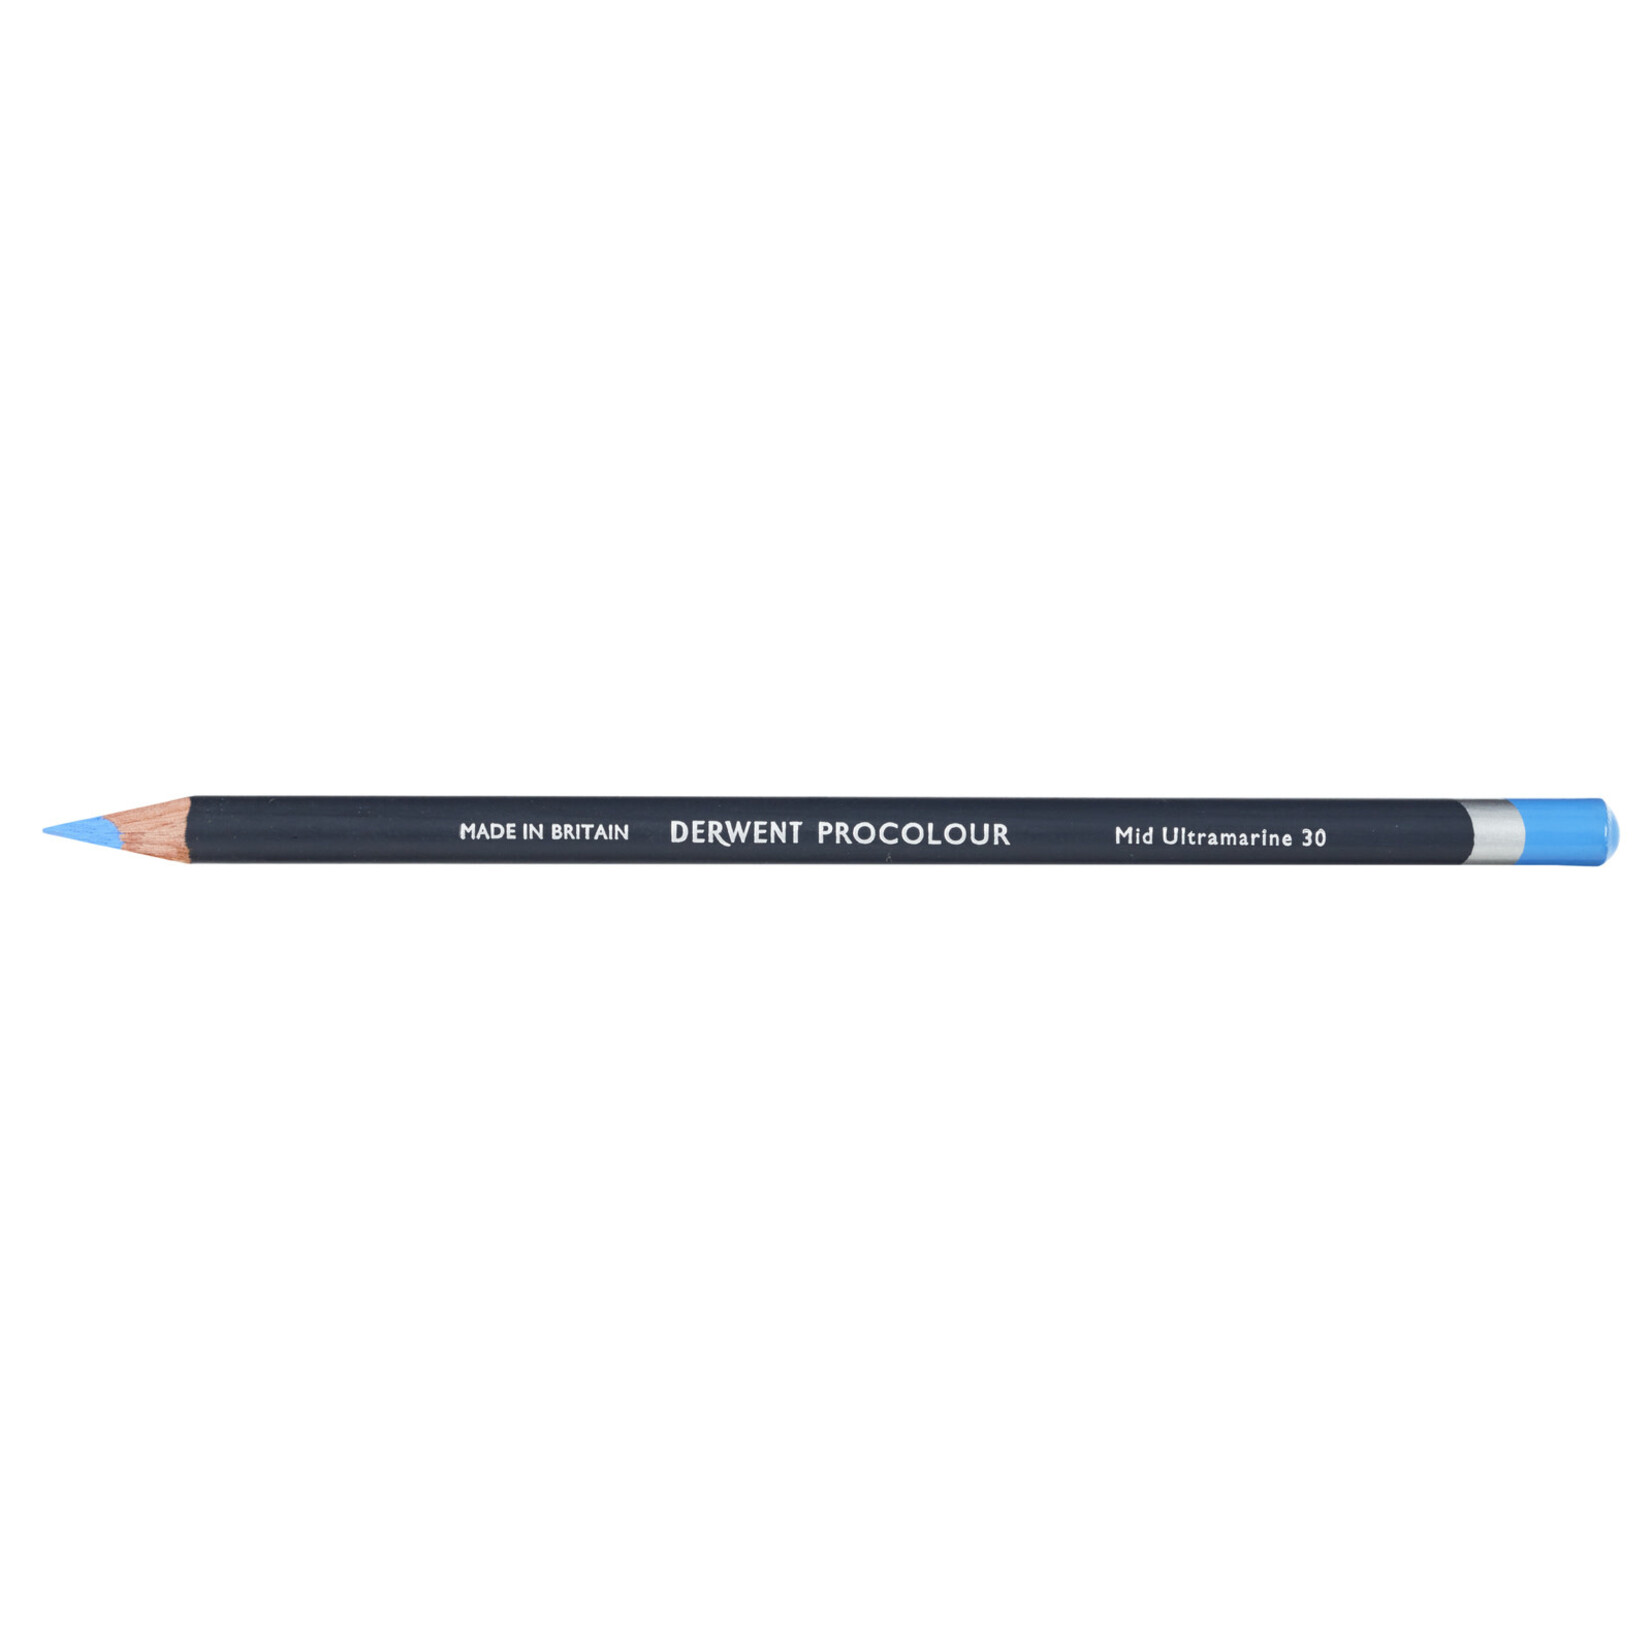 Derwent Procolour Pencil Middle Ultramarine